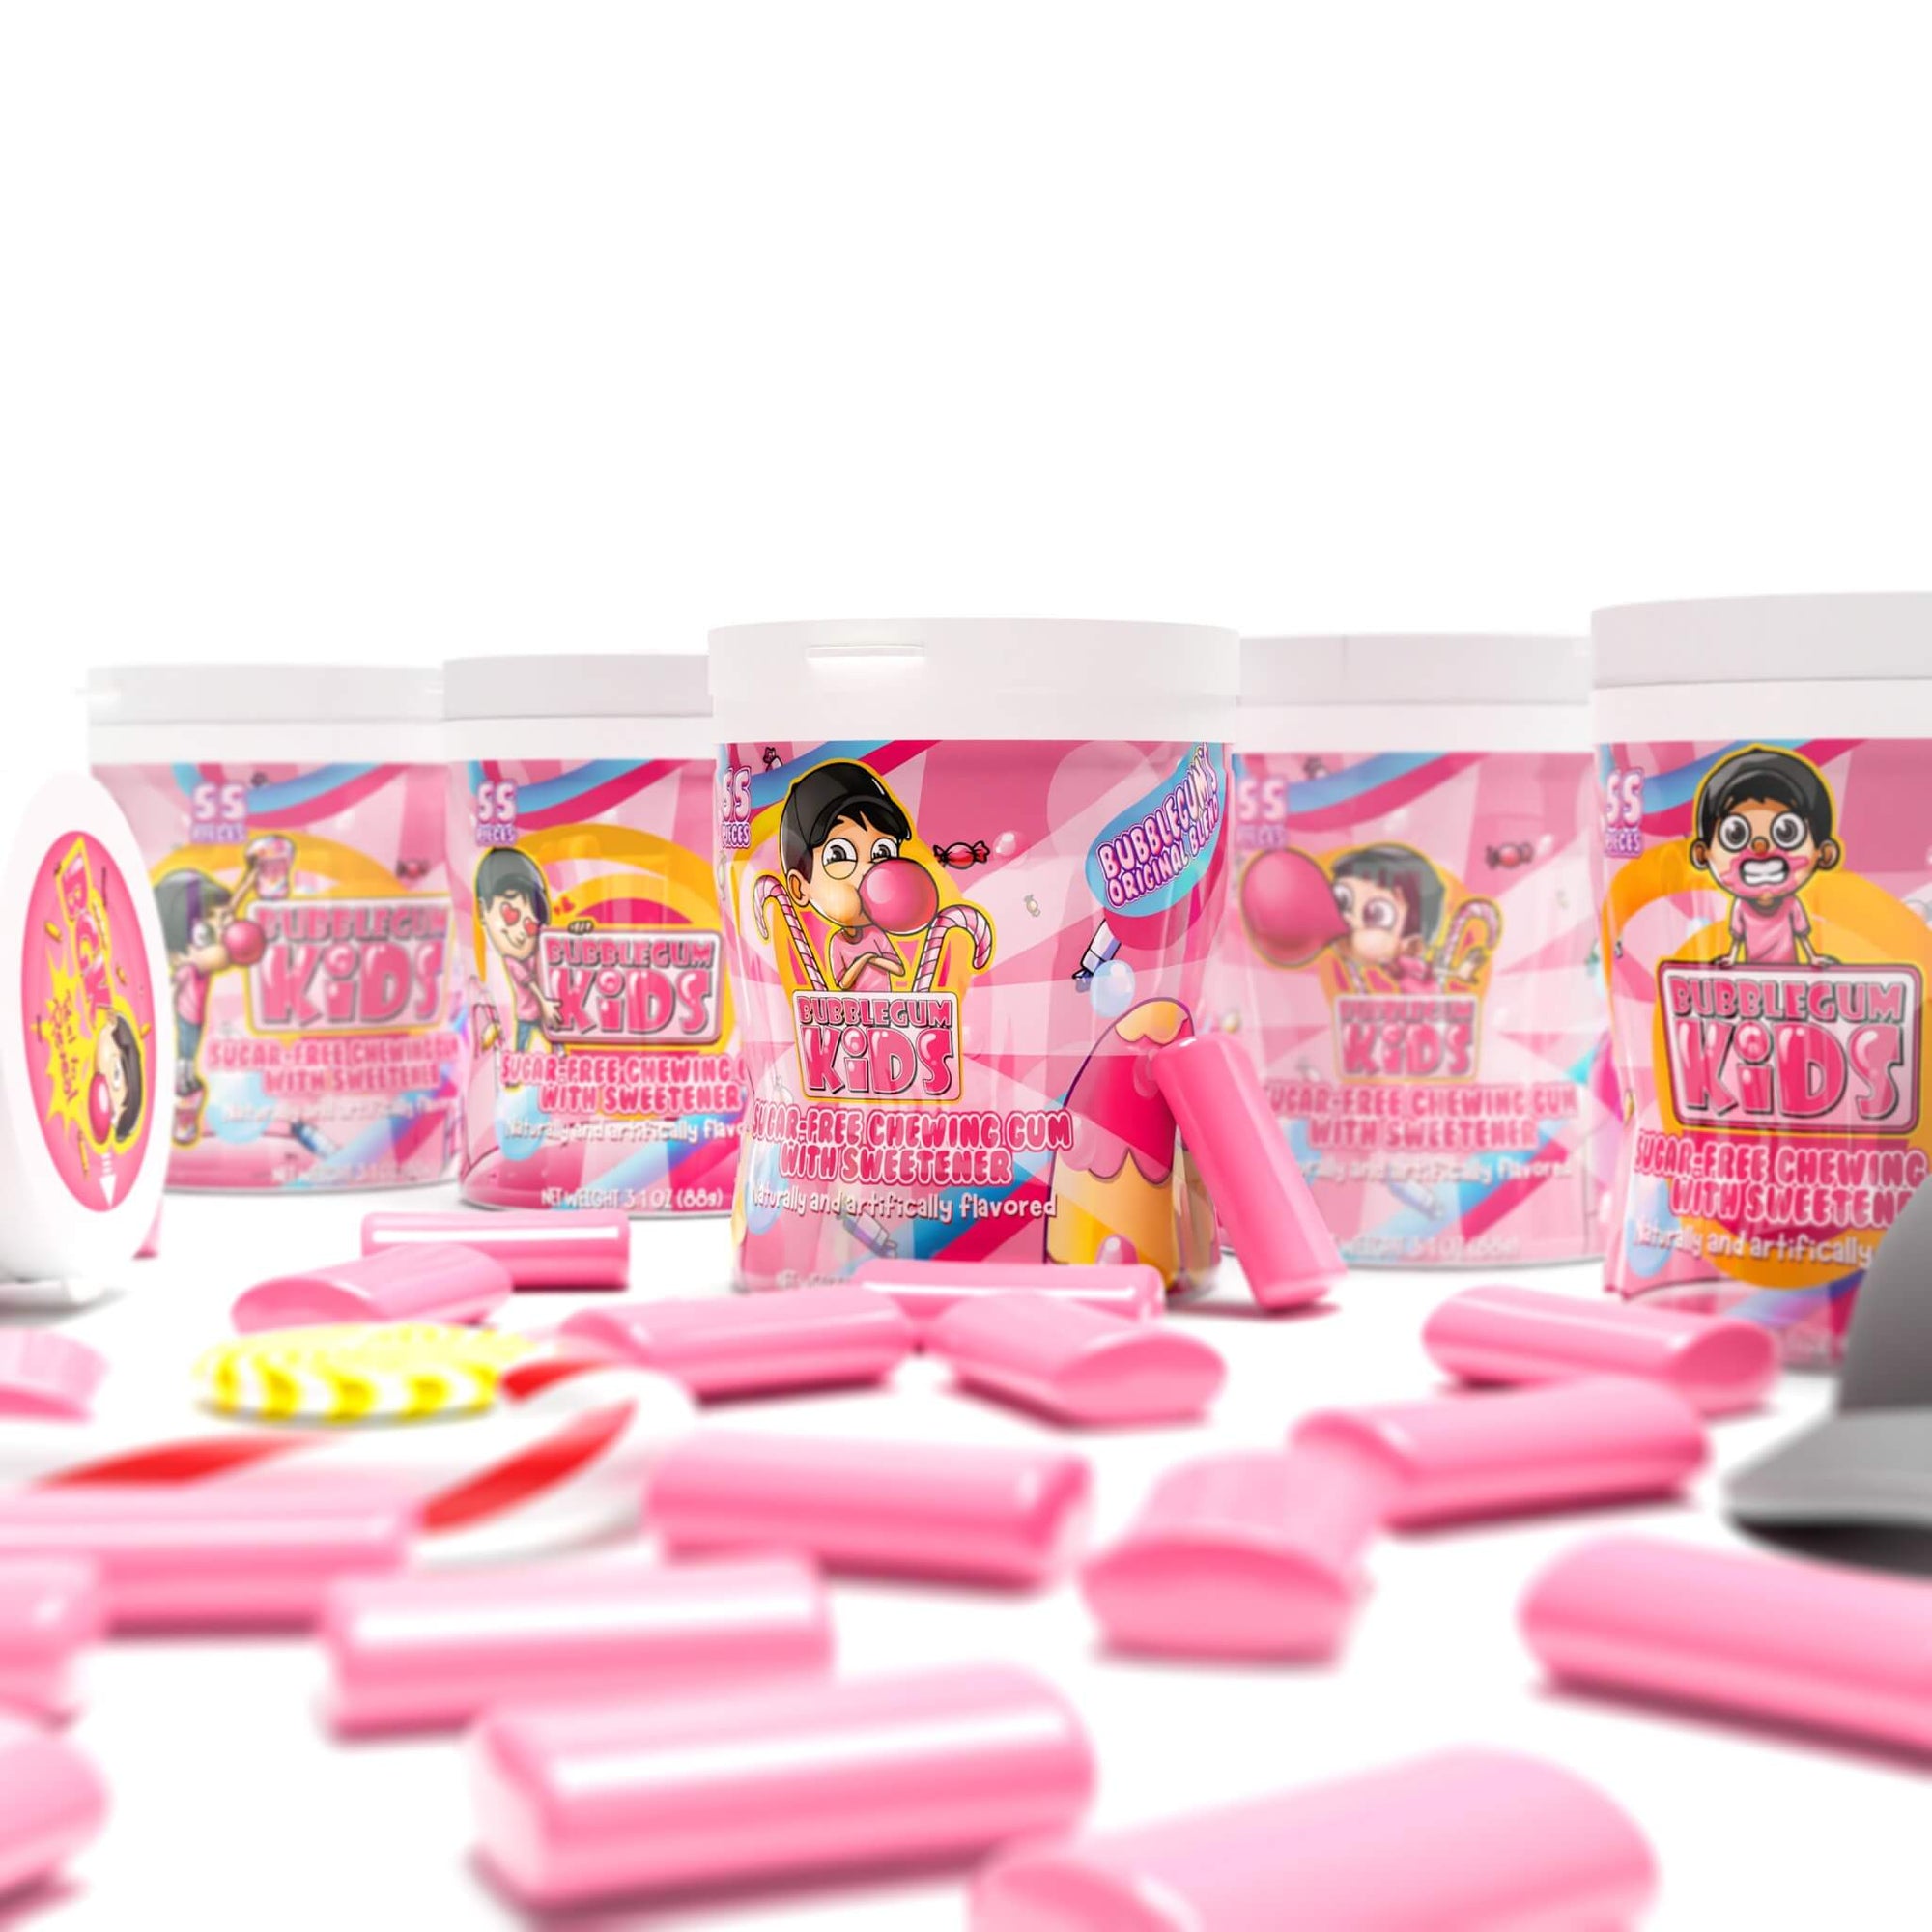 Packs of Bubblegum’s Original Blend and pieces of gum